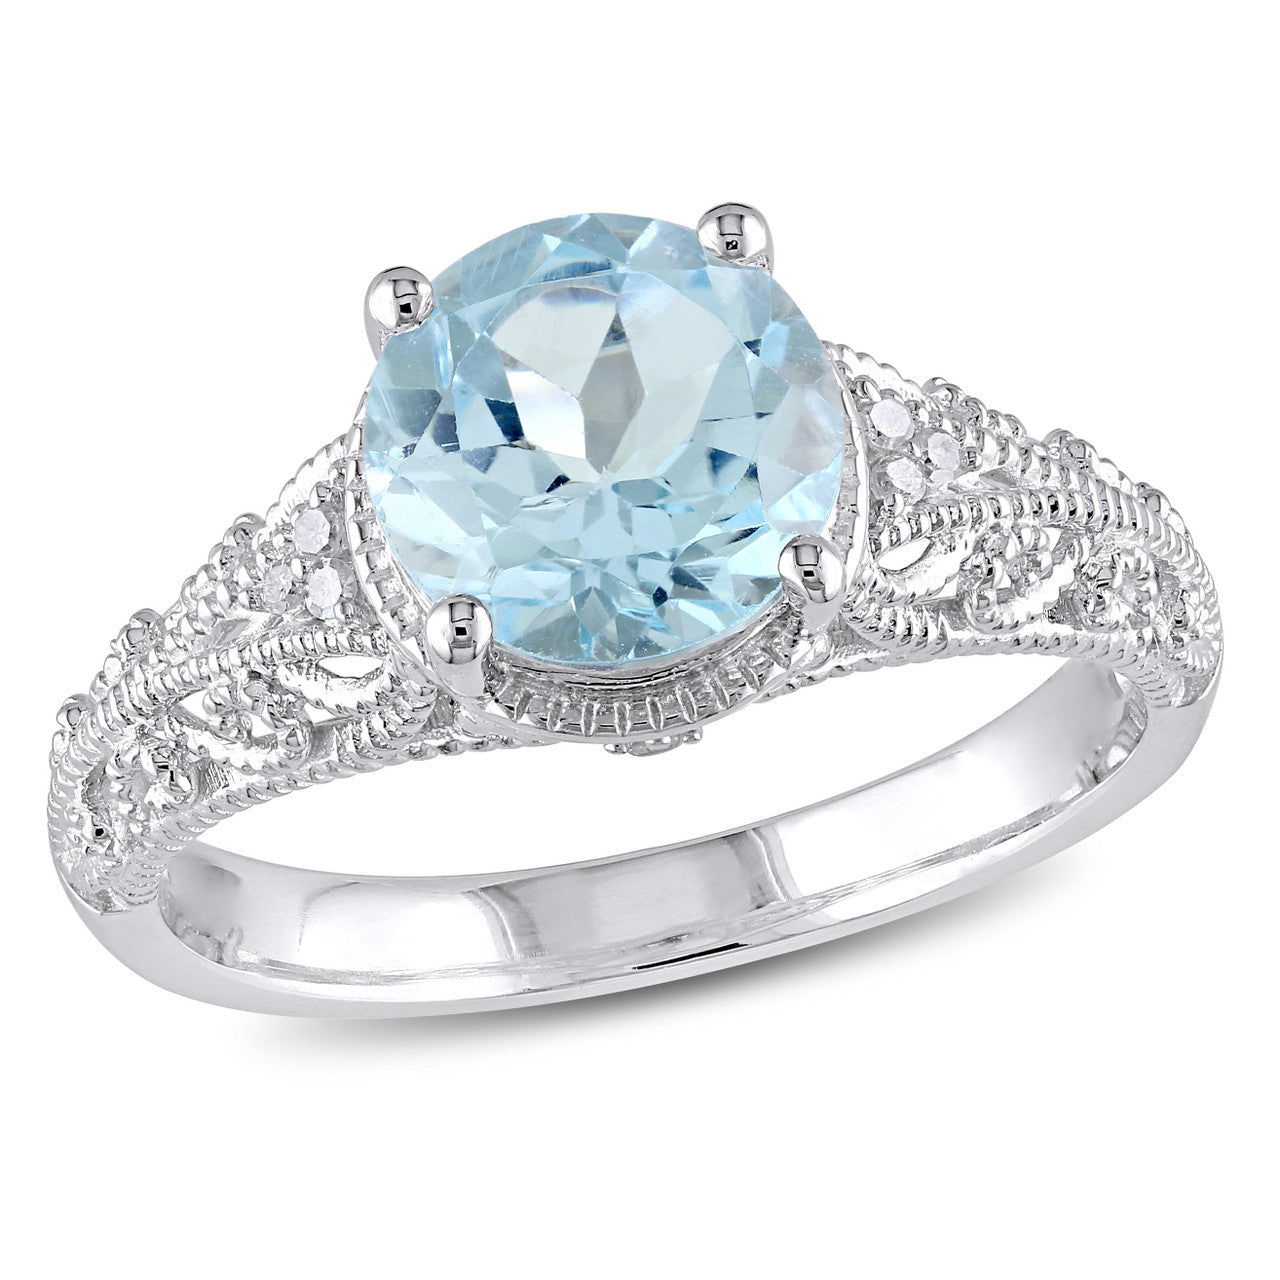 Ice Jewellery 0.04 CT Diamond TW & 2 1/3 CT TGW Sky Blue Topaz Cocktail Ring in Sterling Silver - 75000004824 | Ice Jewellery Australia